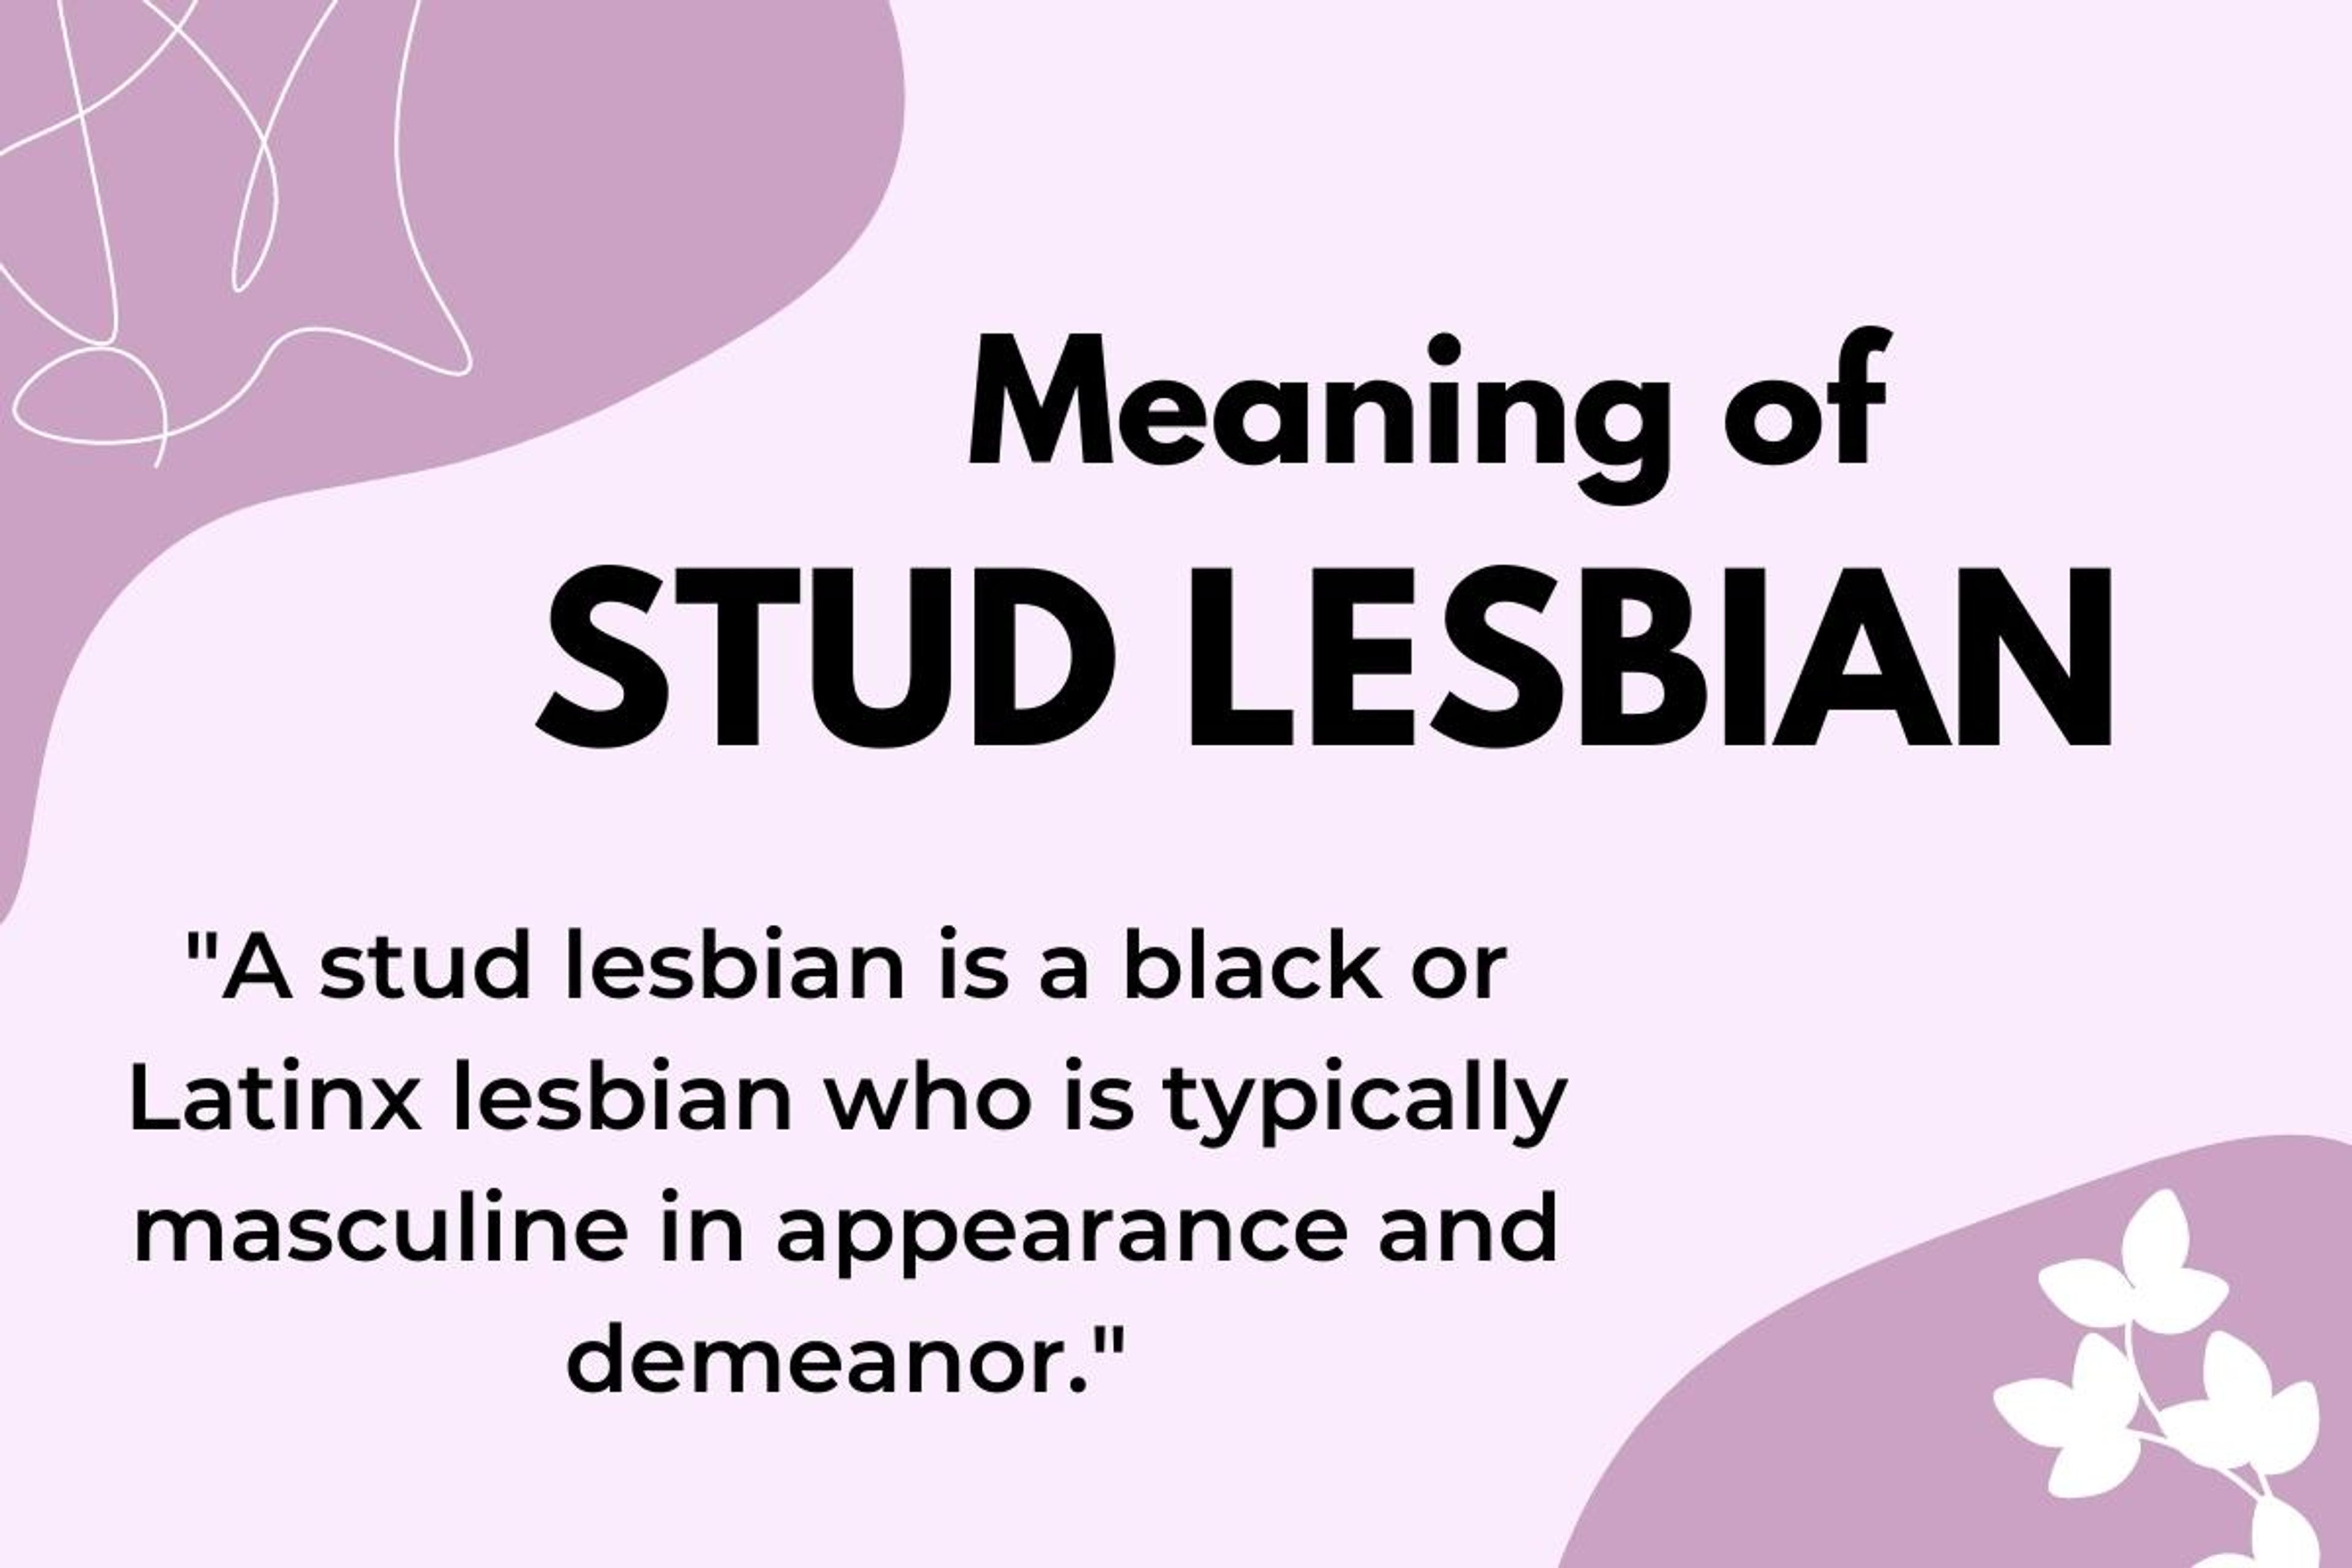 Stud lesbian meaning